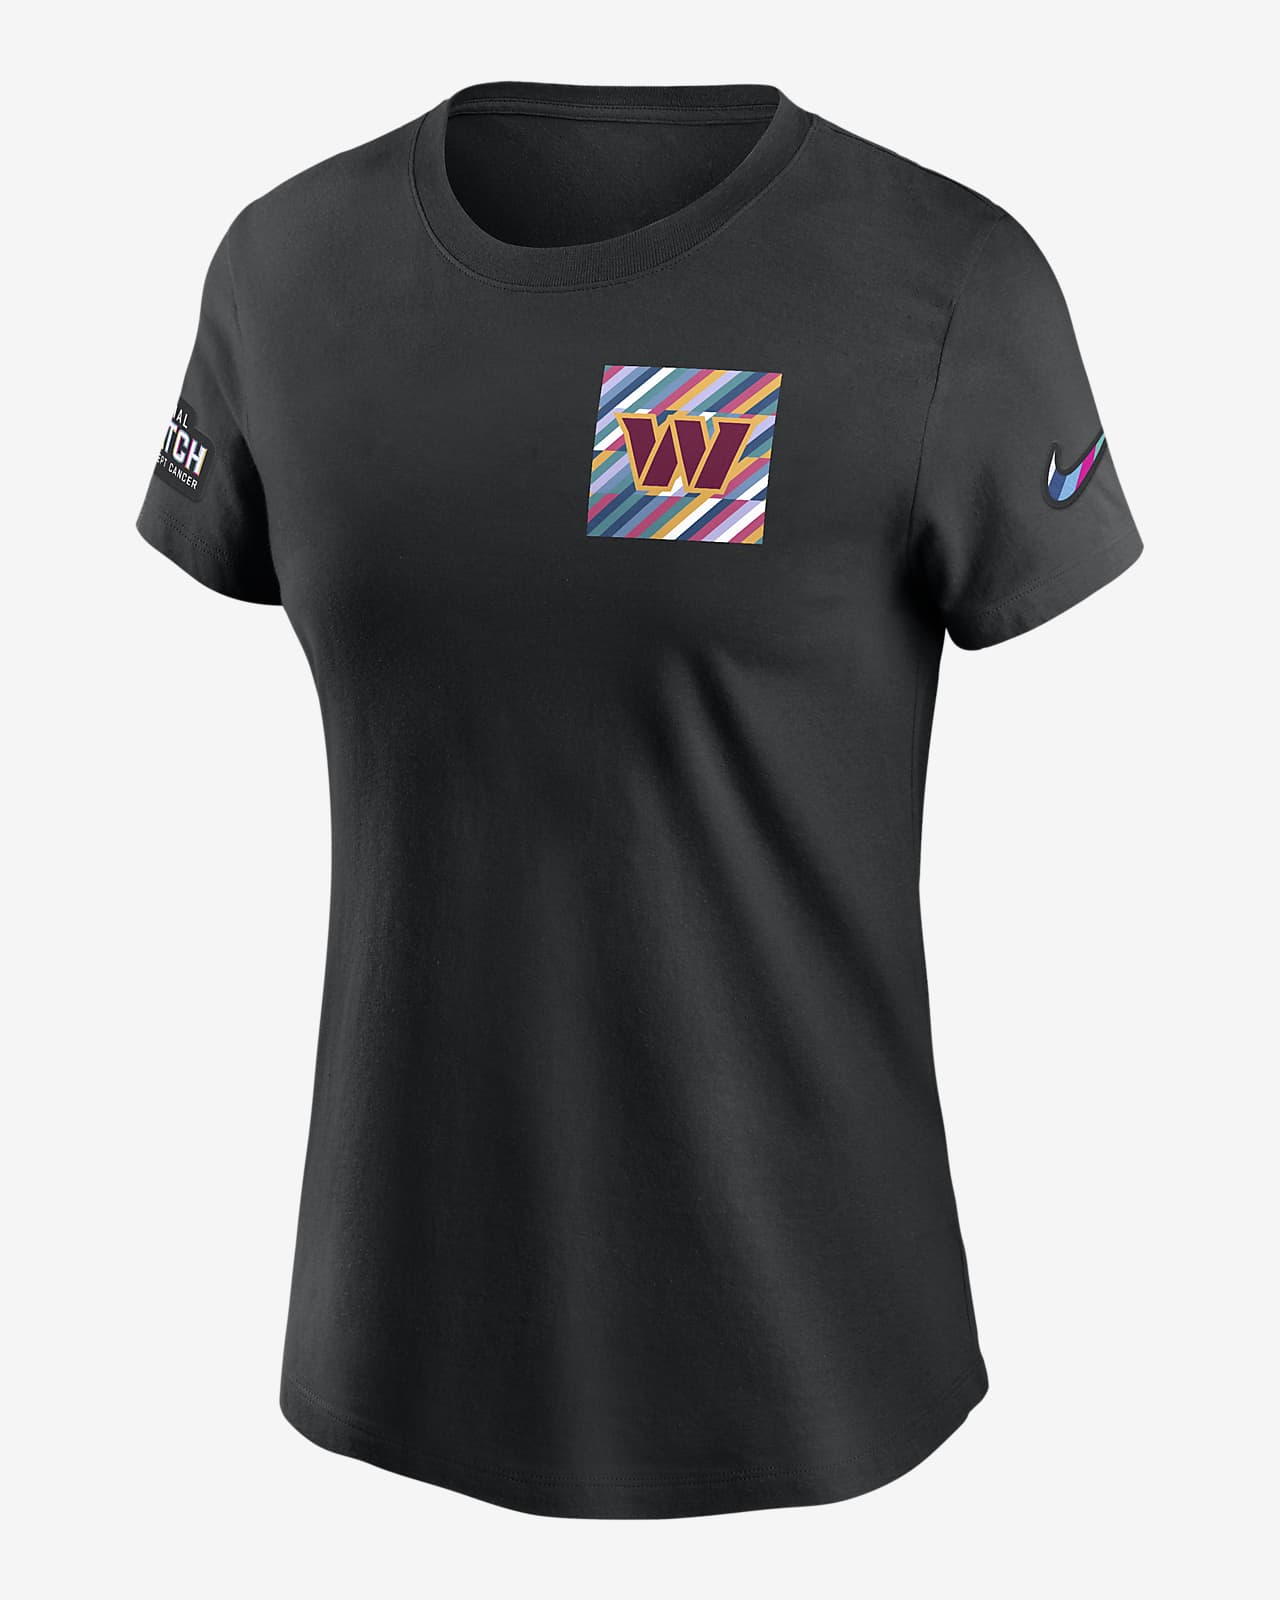 Washington Commanders Crucial Catch Sideline Women's Nike NFL T-Shirt.